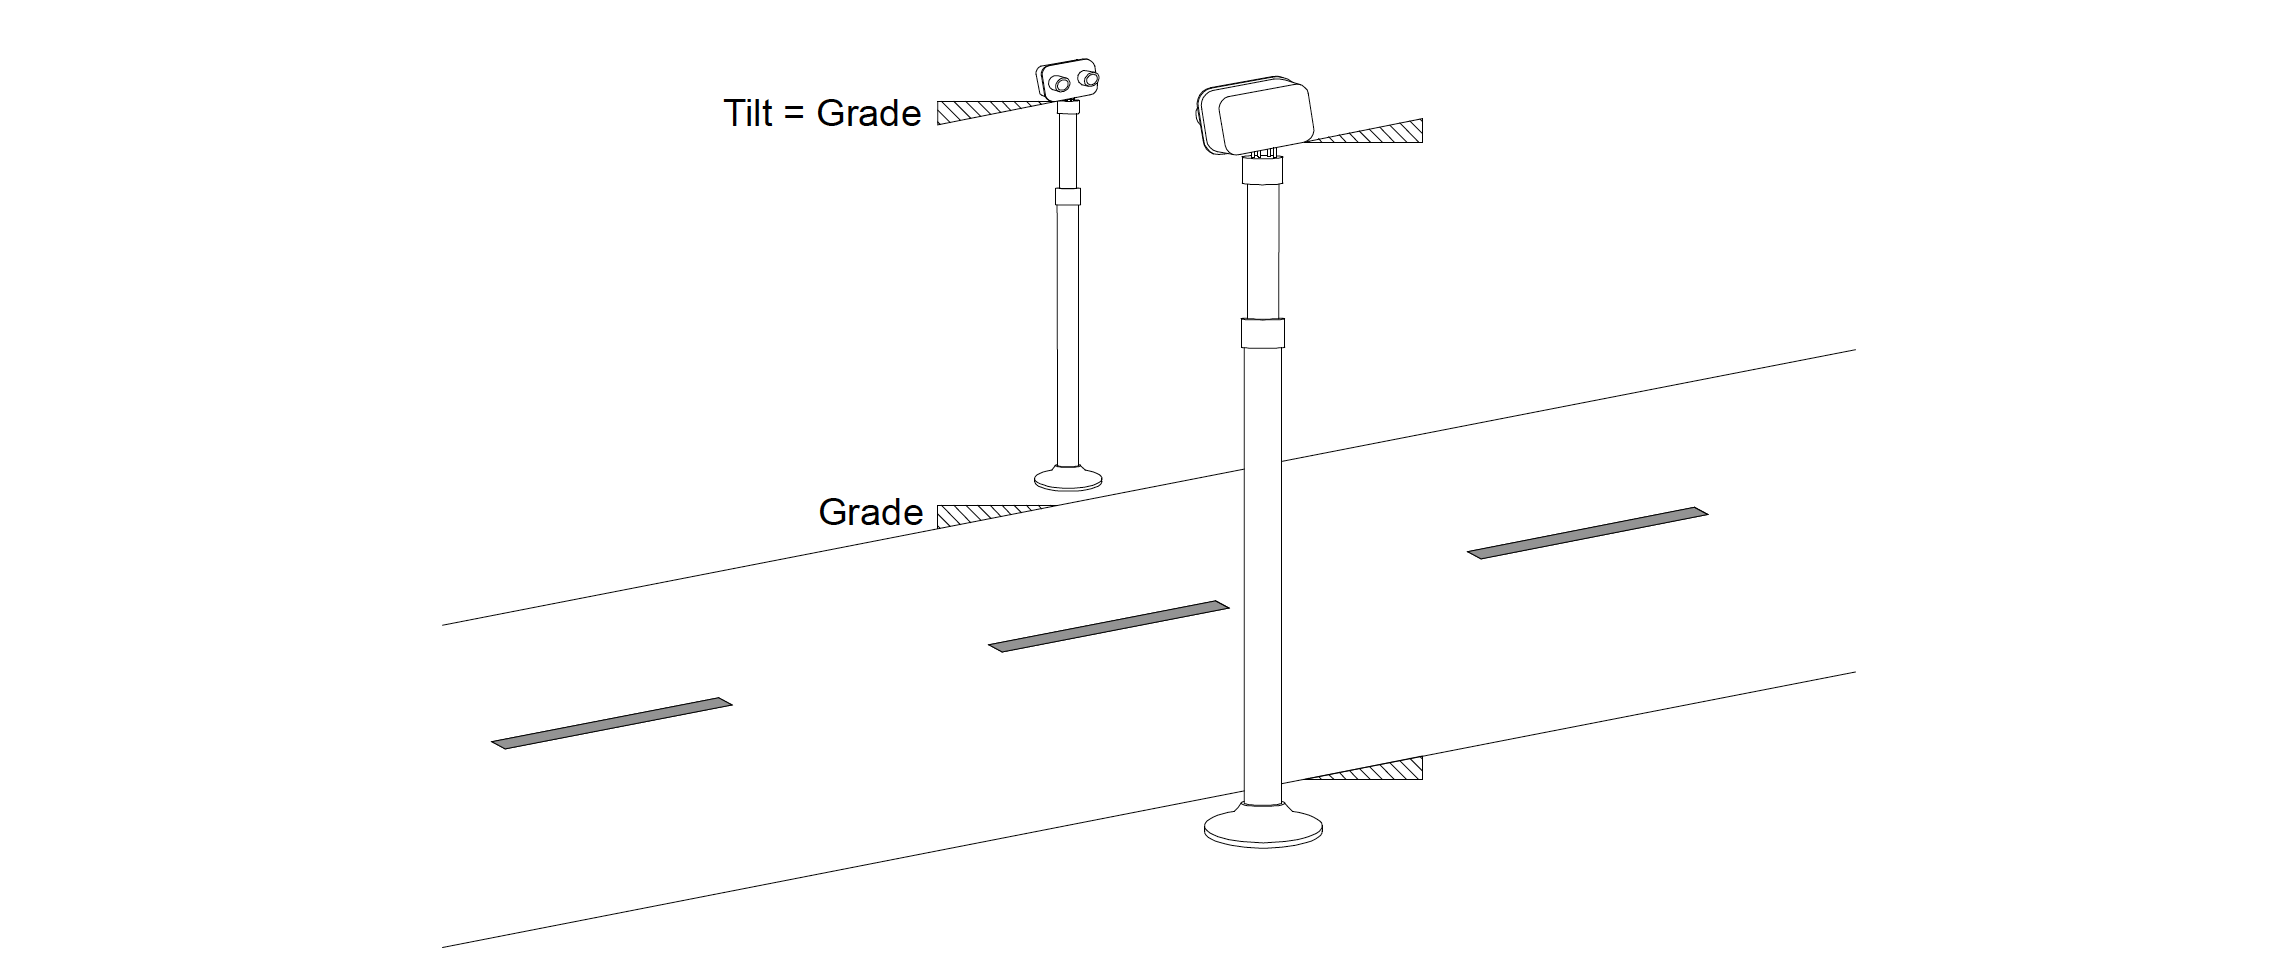 OHVDS transmitter and reciever tilt and grade diagram